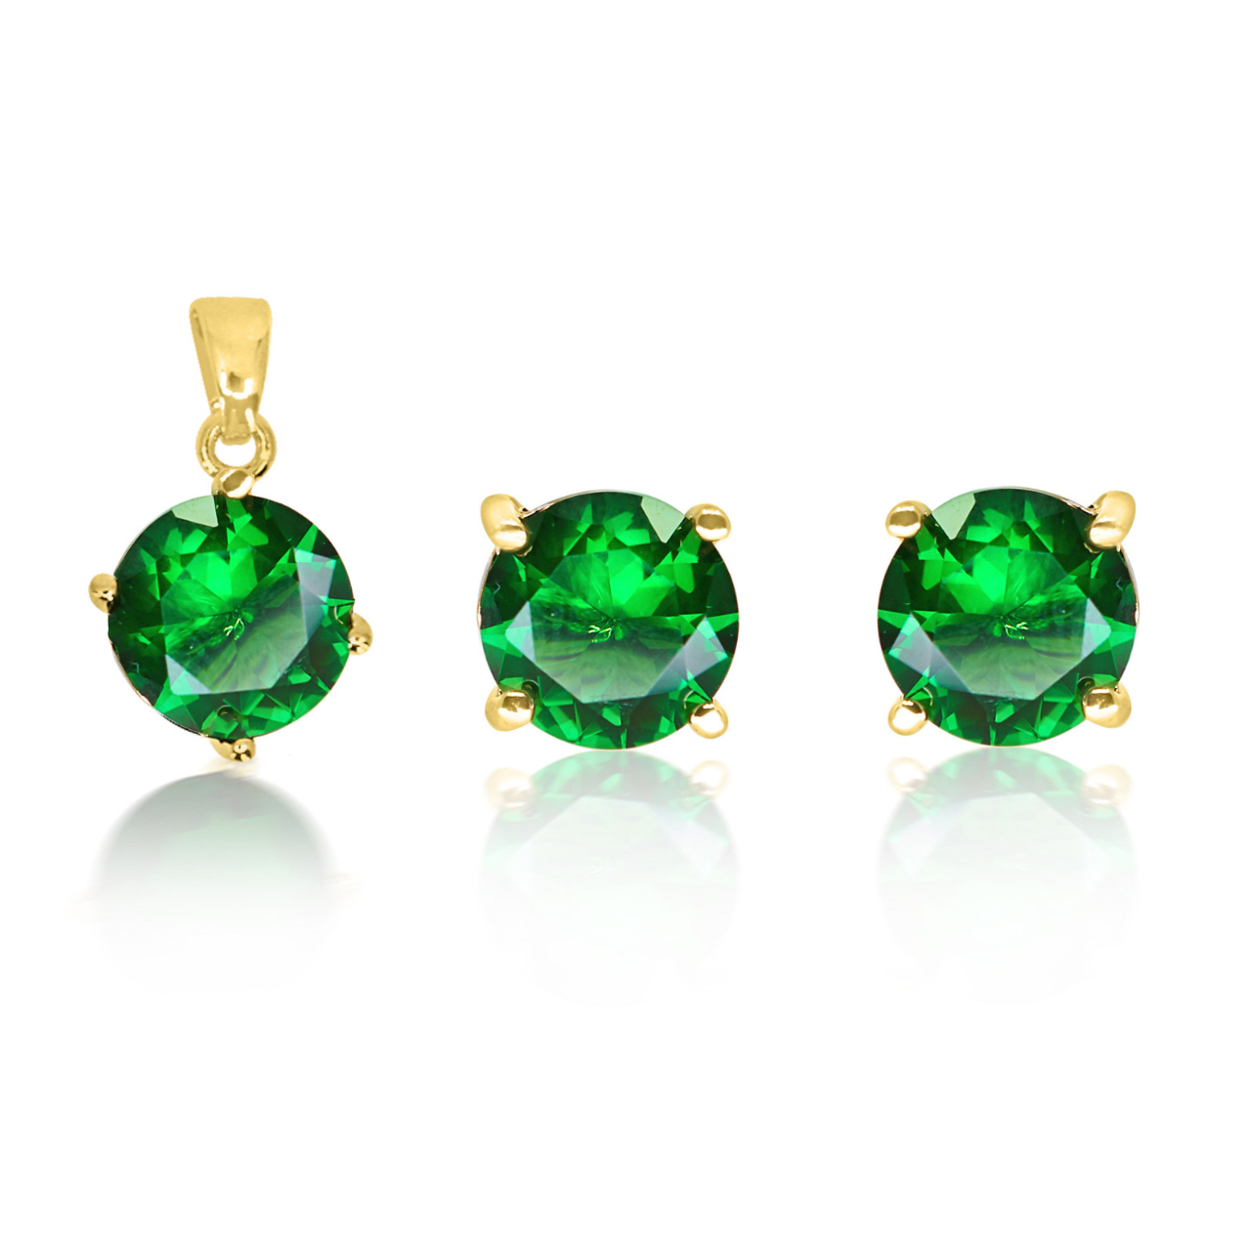 4CT Gold Filled High Polish Finsh Genuine Emerald Green Set